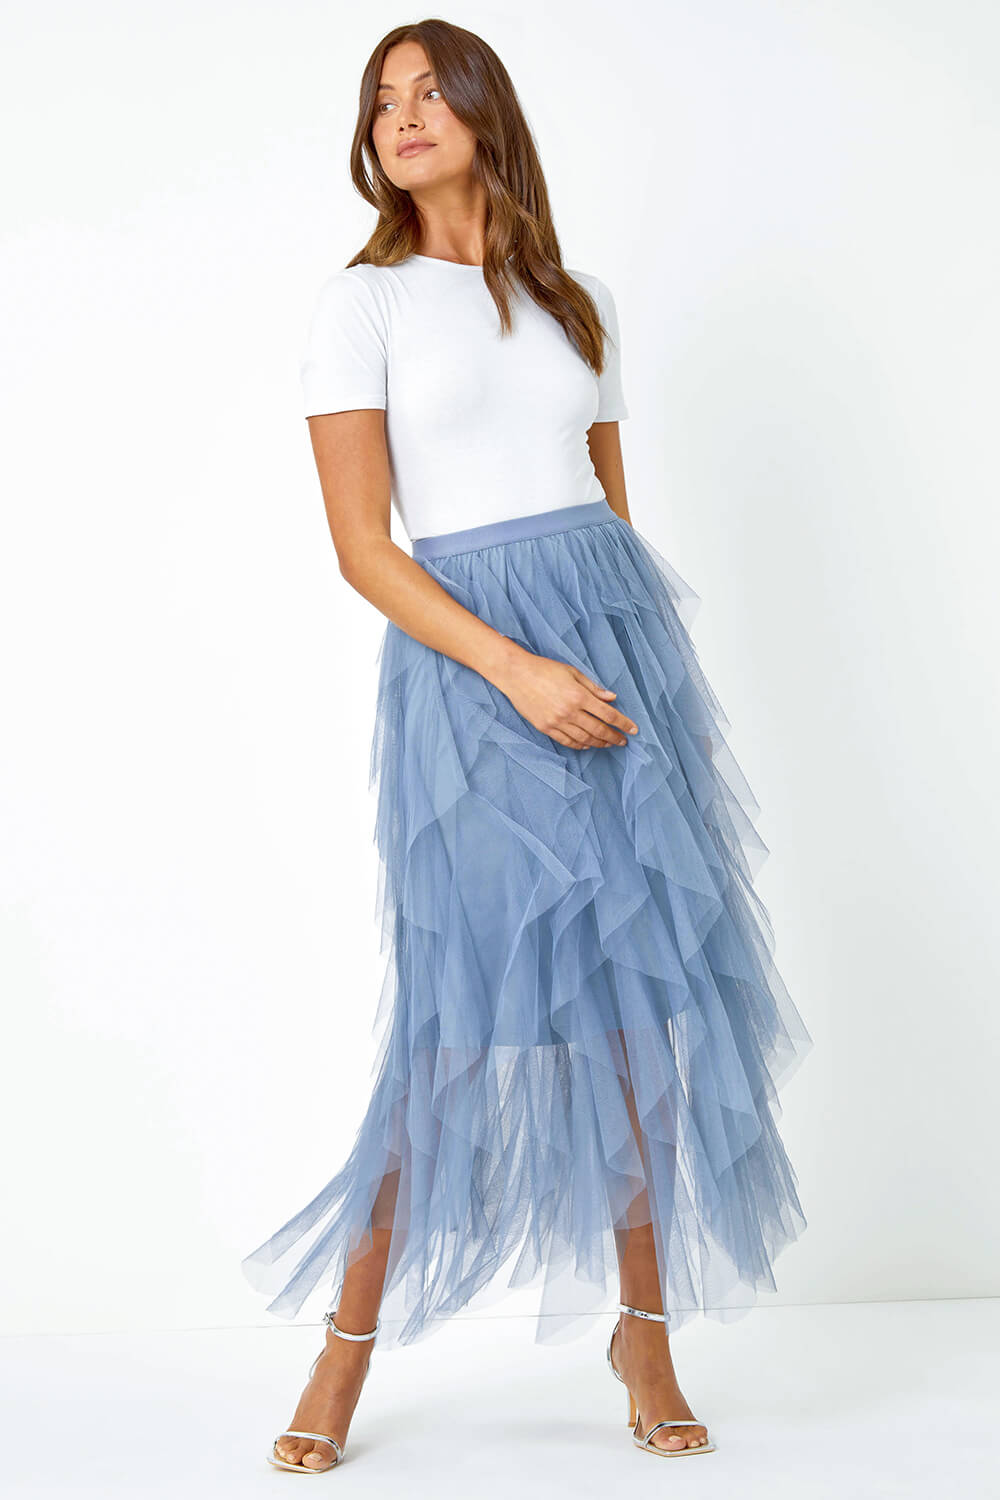 Steel Blue Elasticated Mesh Layered Skirt, Image 2 of 5